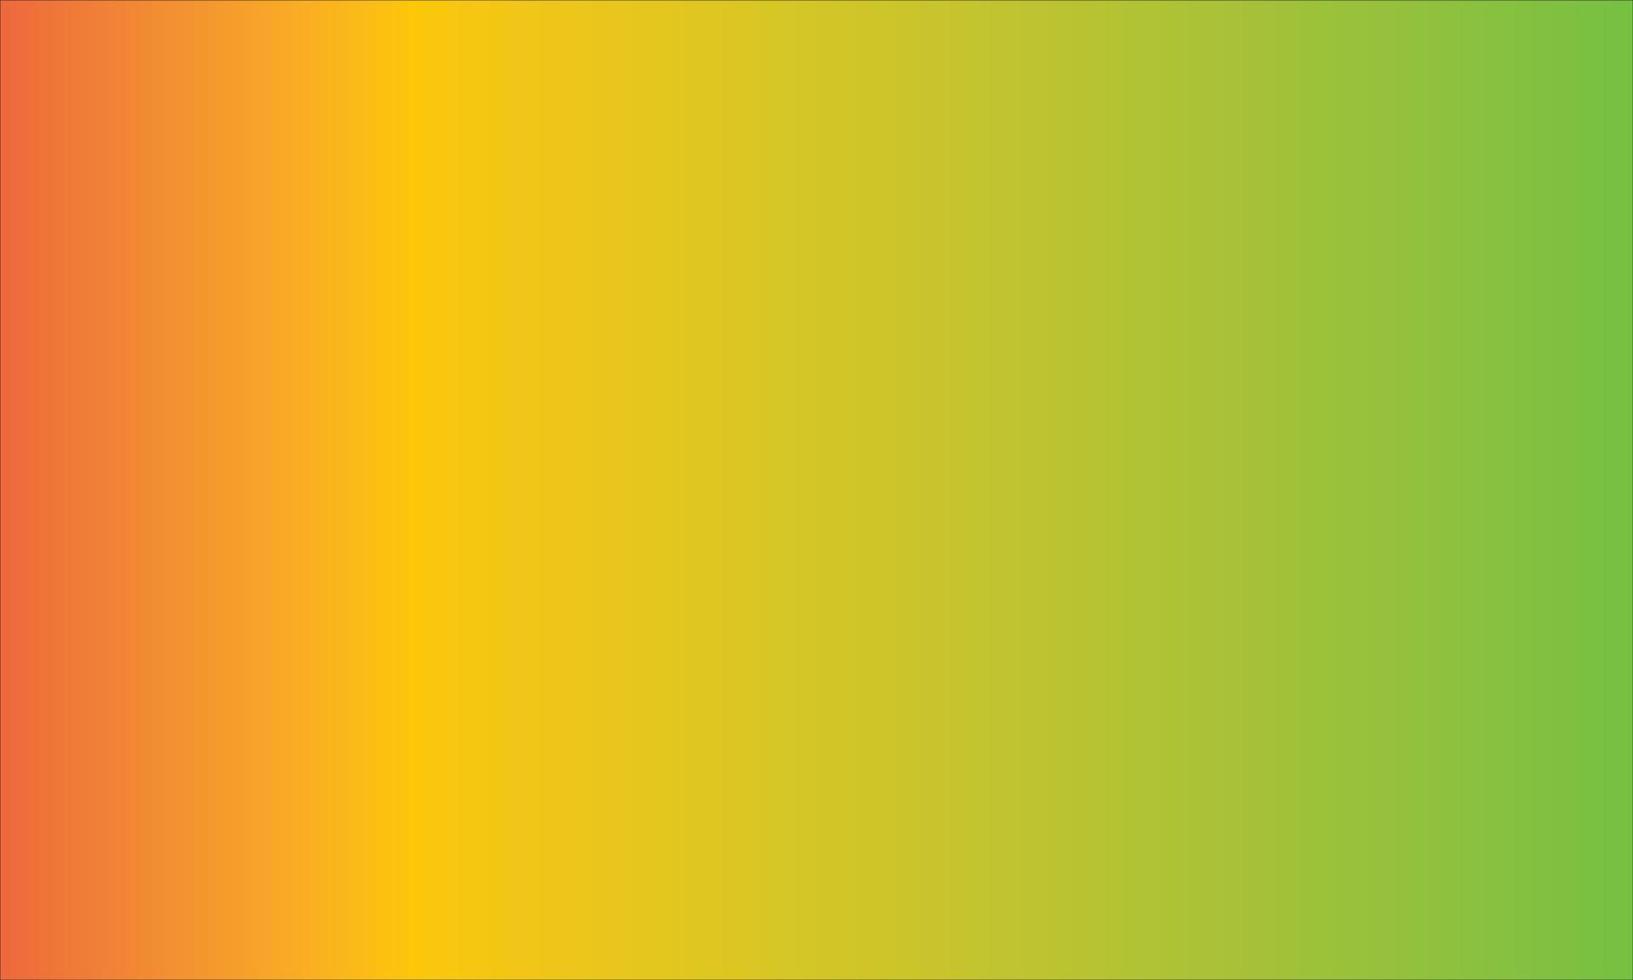 colorful gradien wallpaper background vector